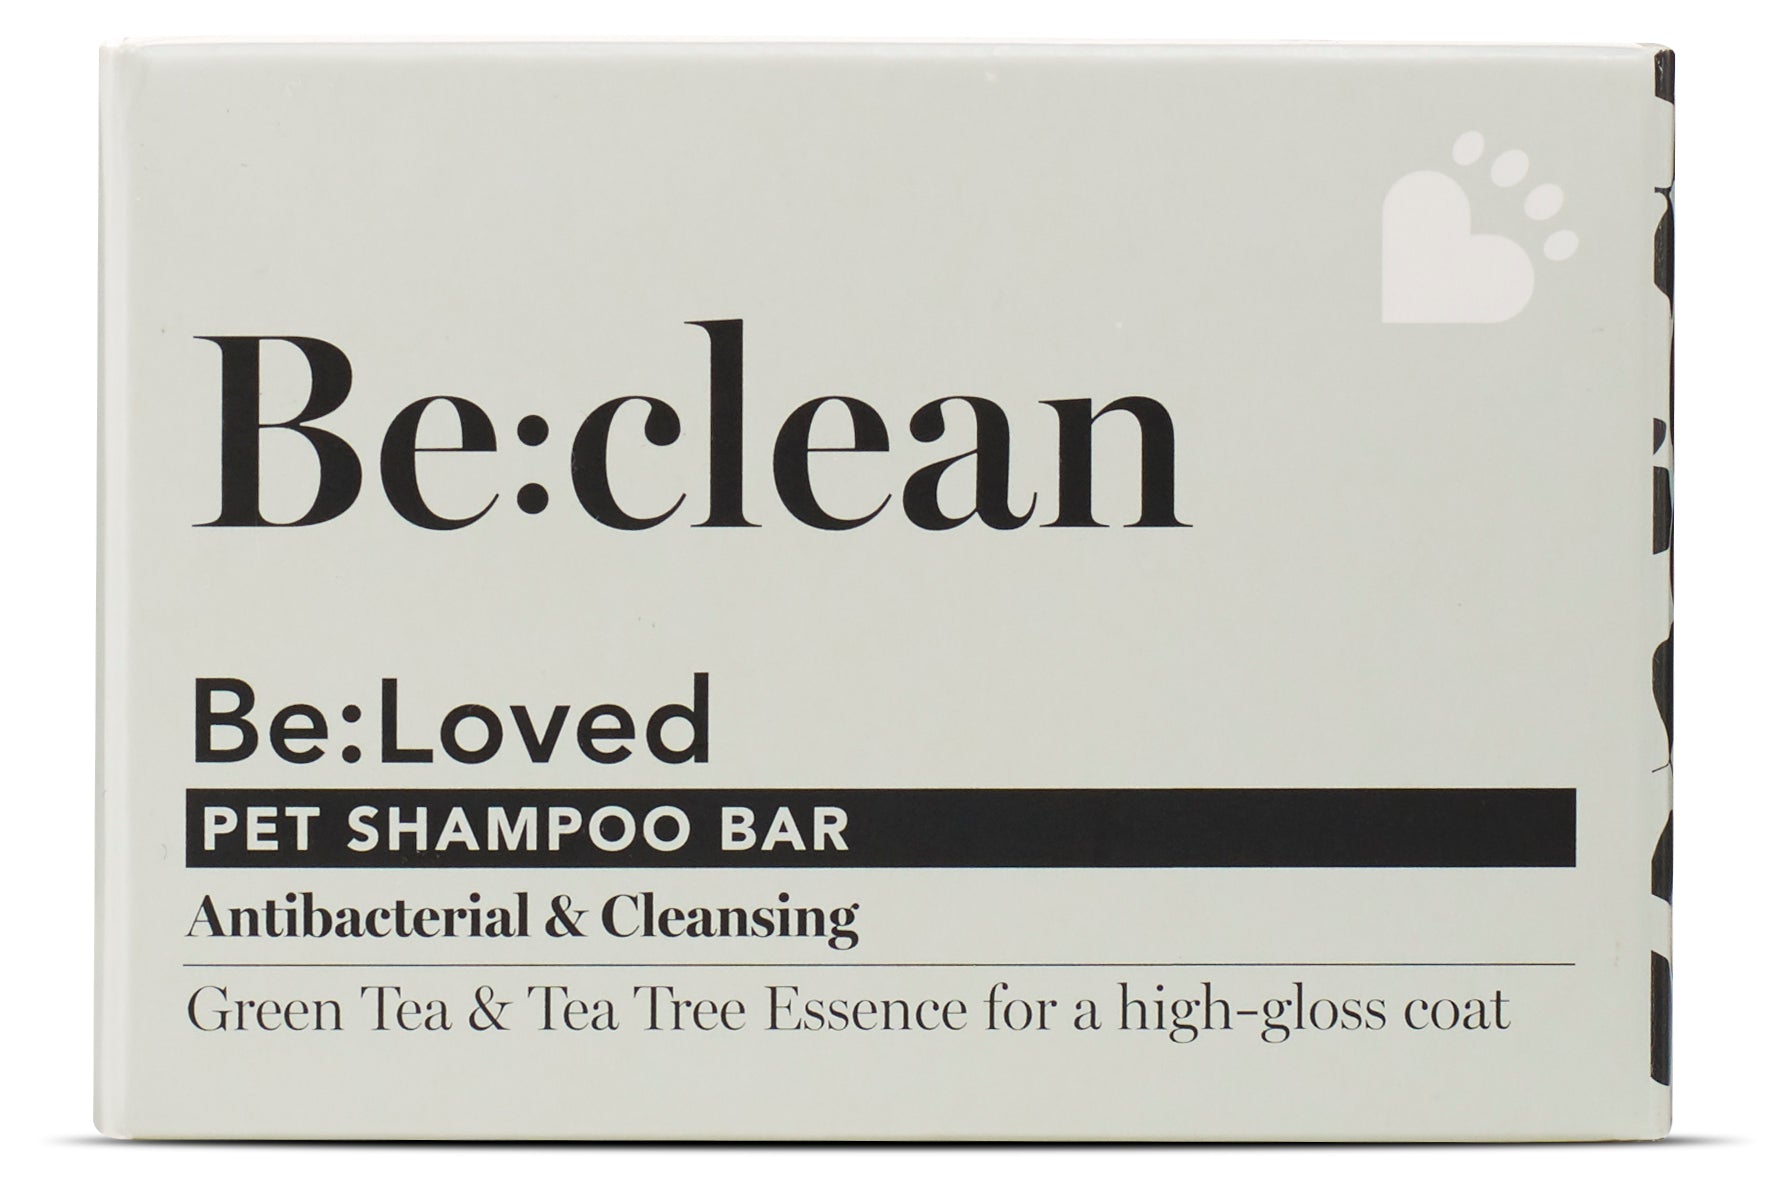 Be:clean pet shampoo bar product